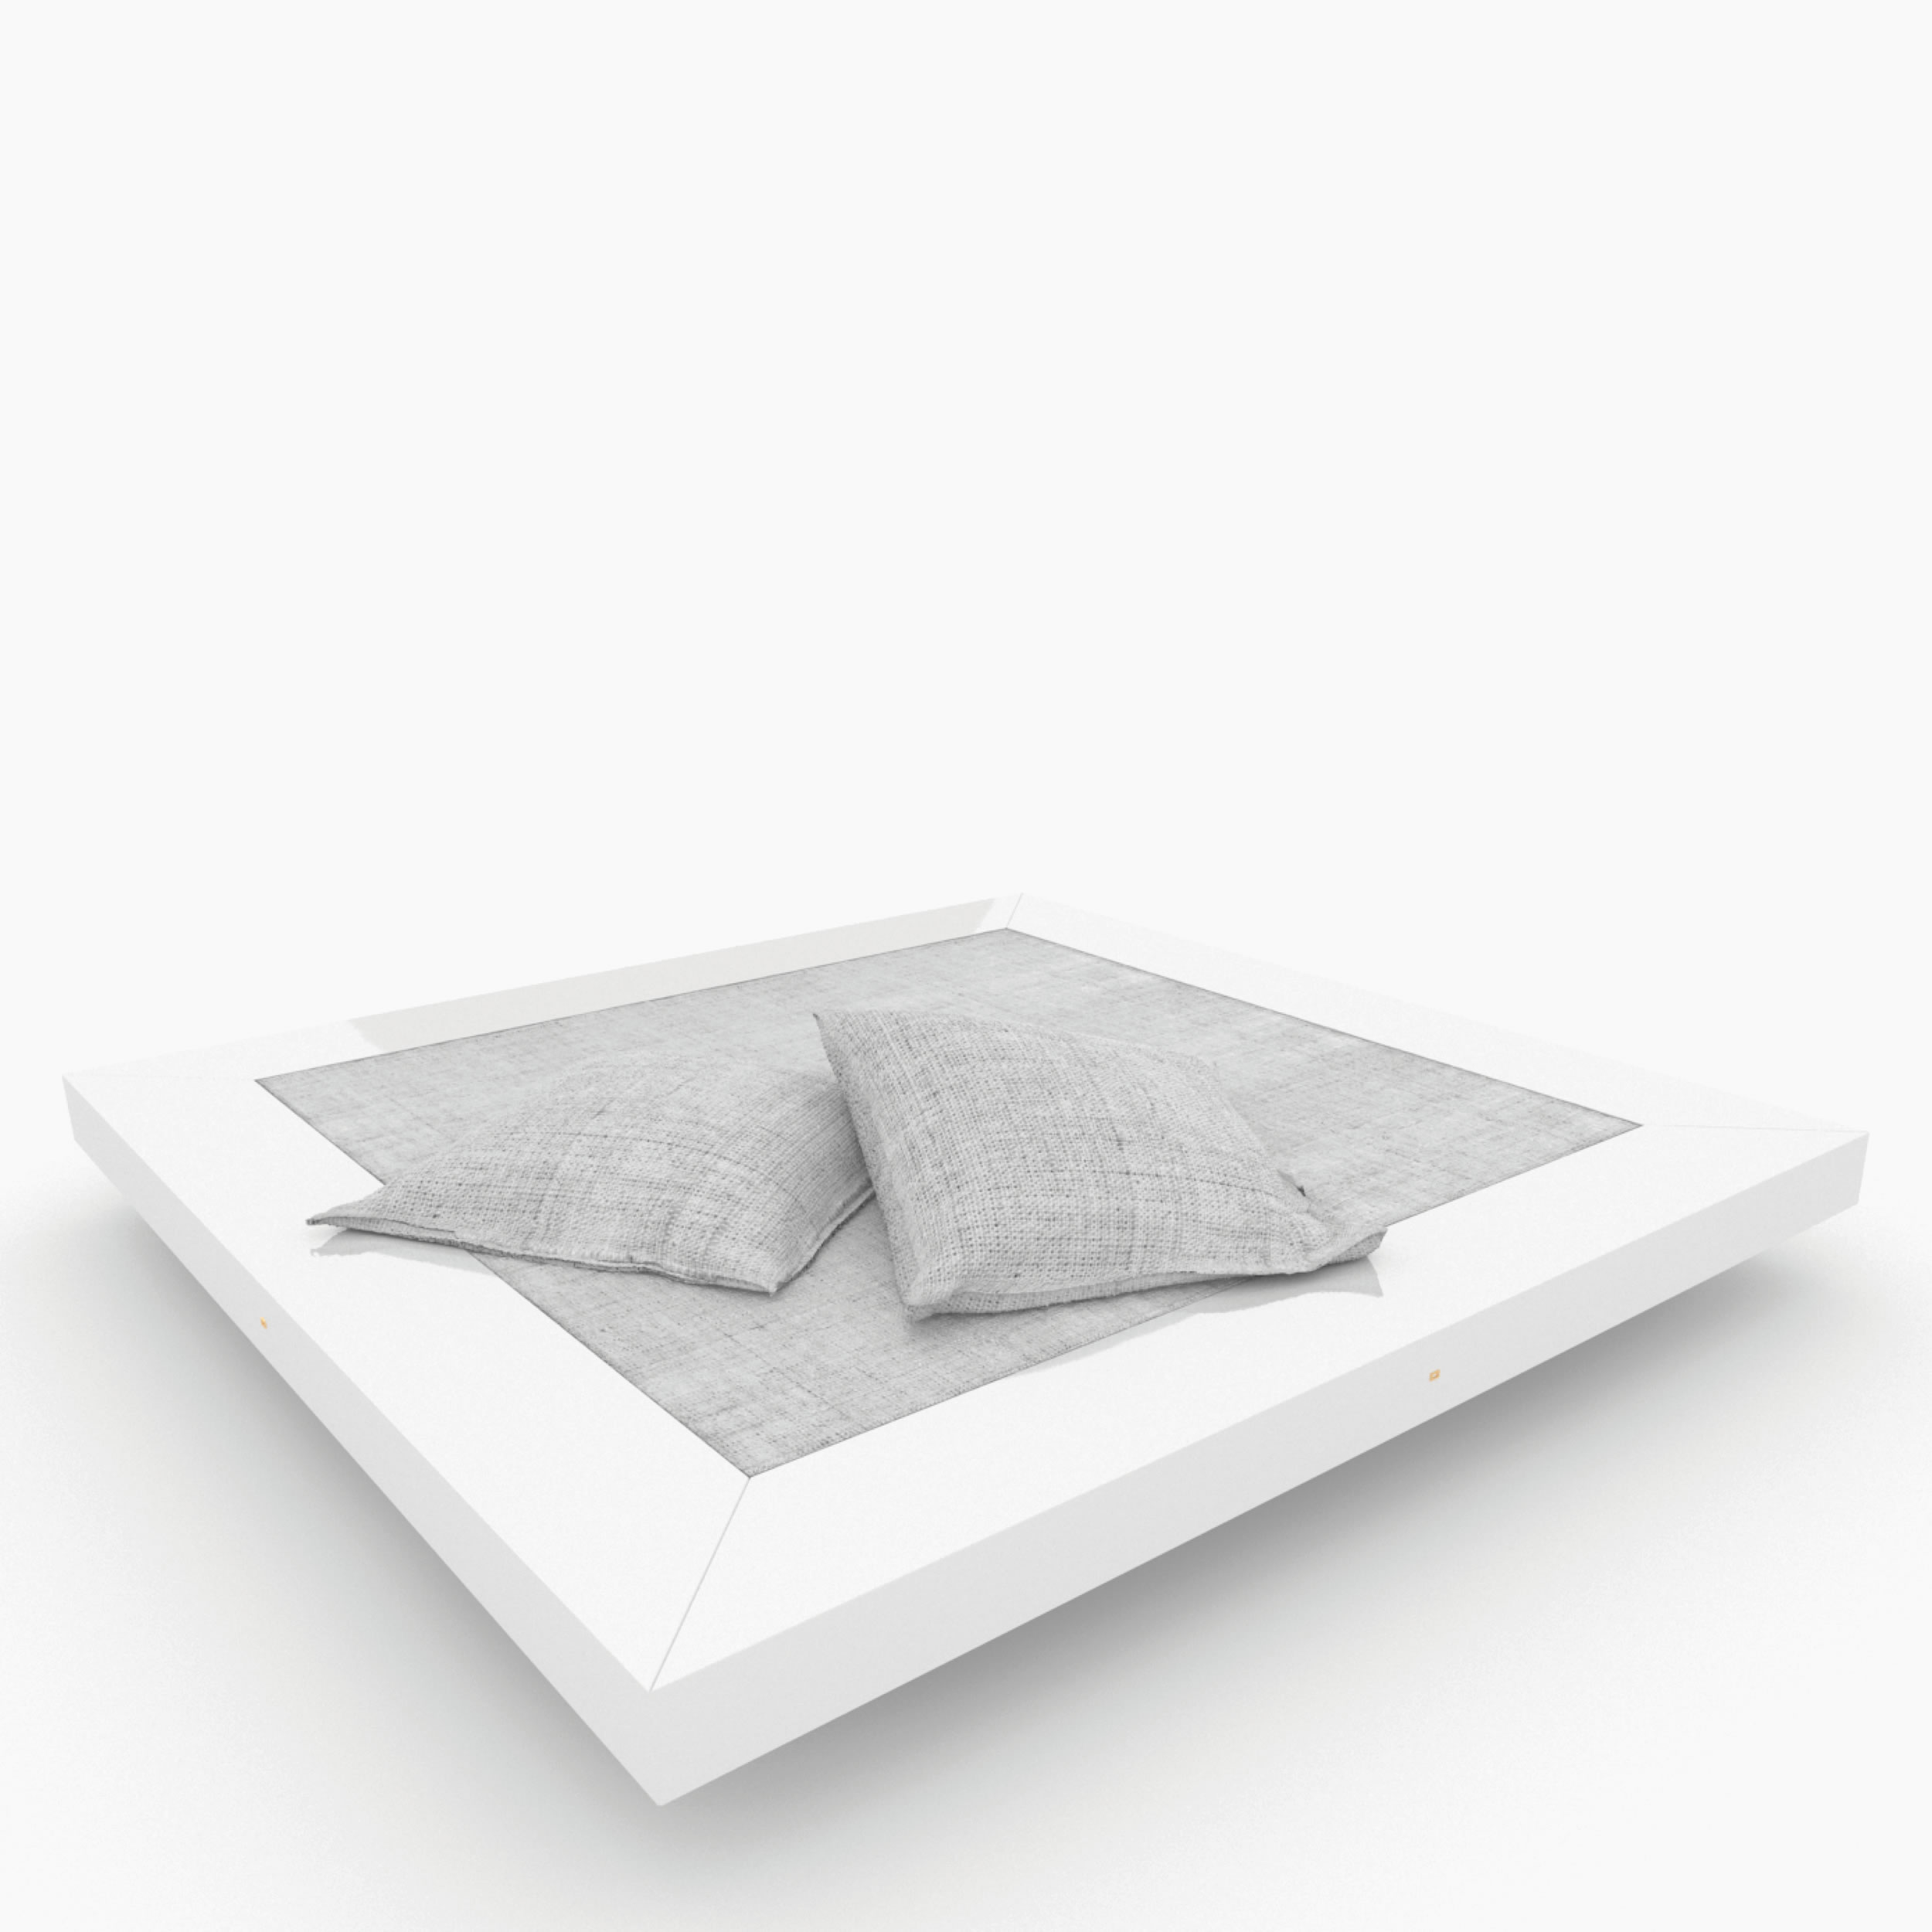 Bett quadratisch weiss archidaily Schlafzimmer minimalist Betten FS 9 FELIX SCHWAKE